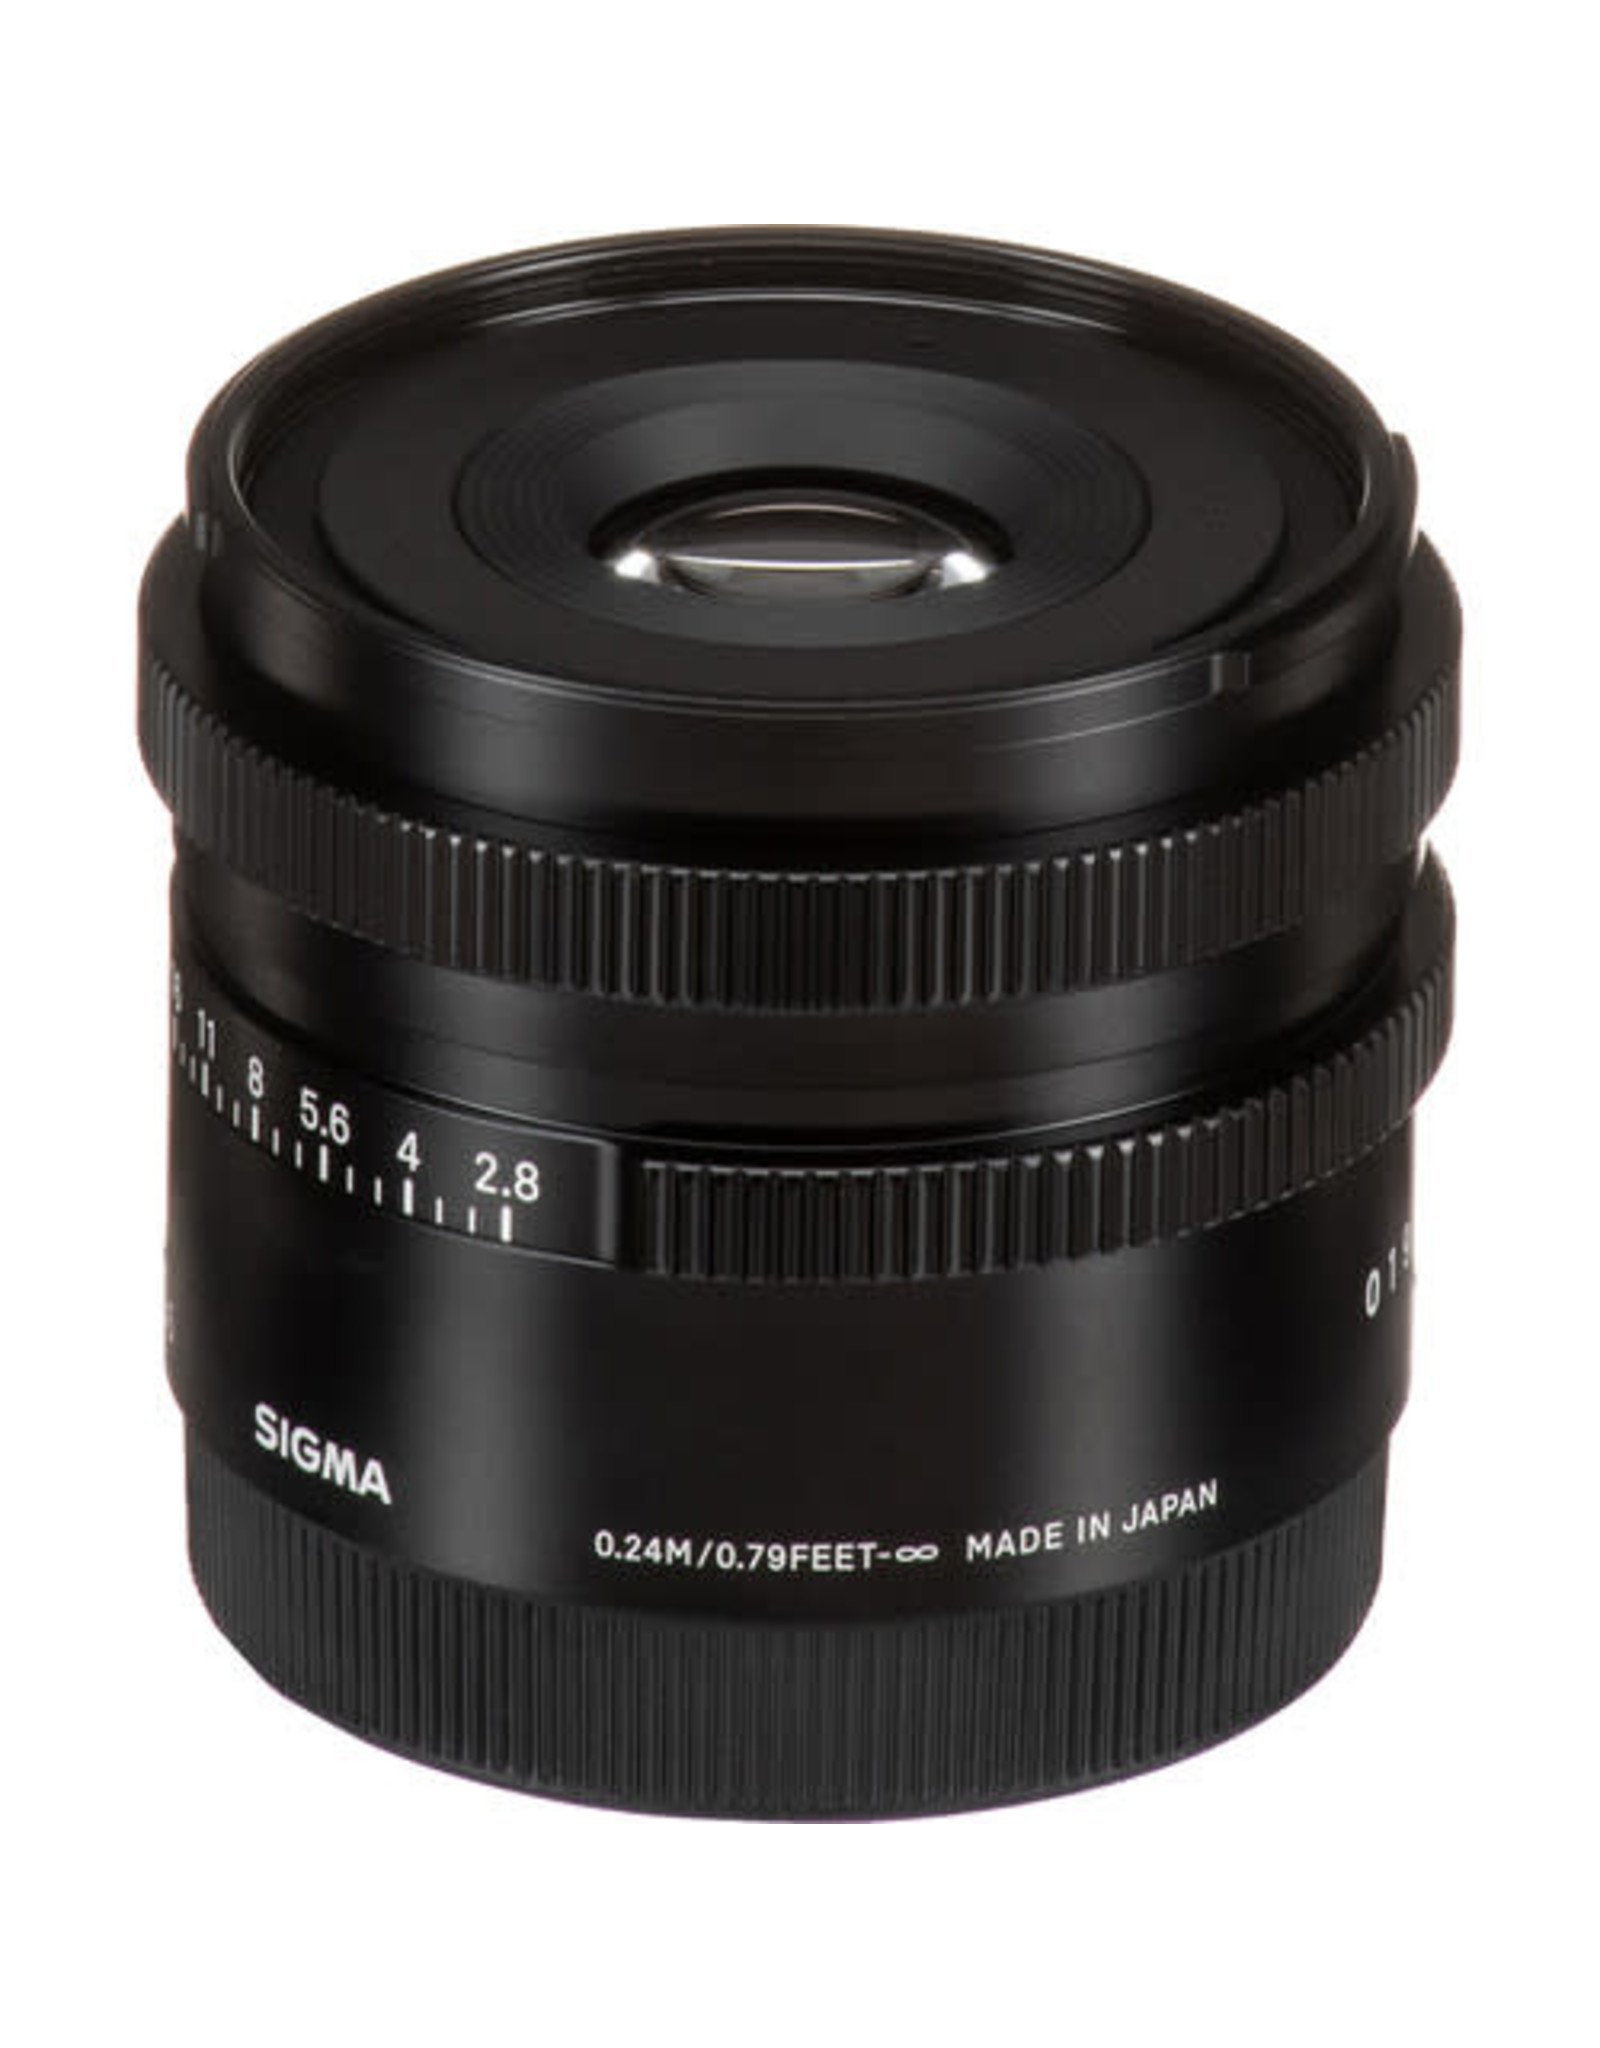 Sigma Sigma 45mm f/2.8 DG DN Contemporary Lens (Specify Mount)